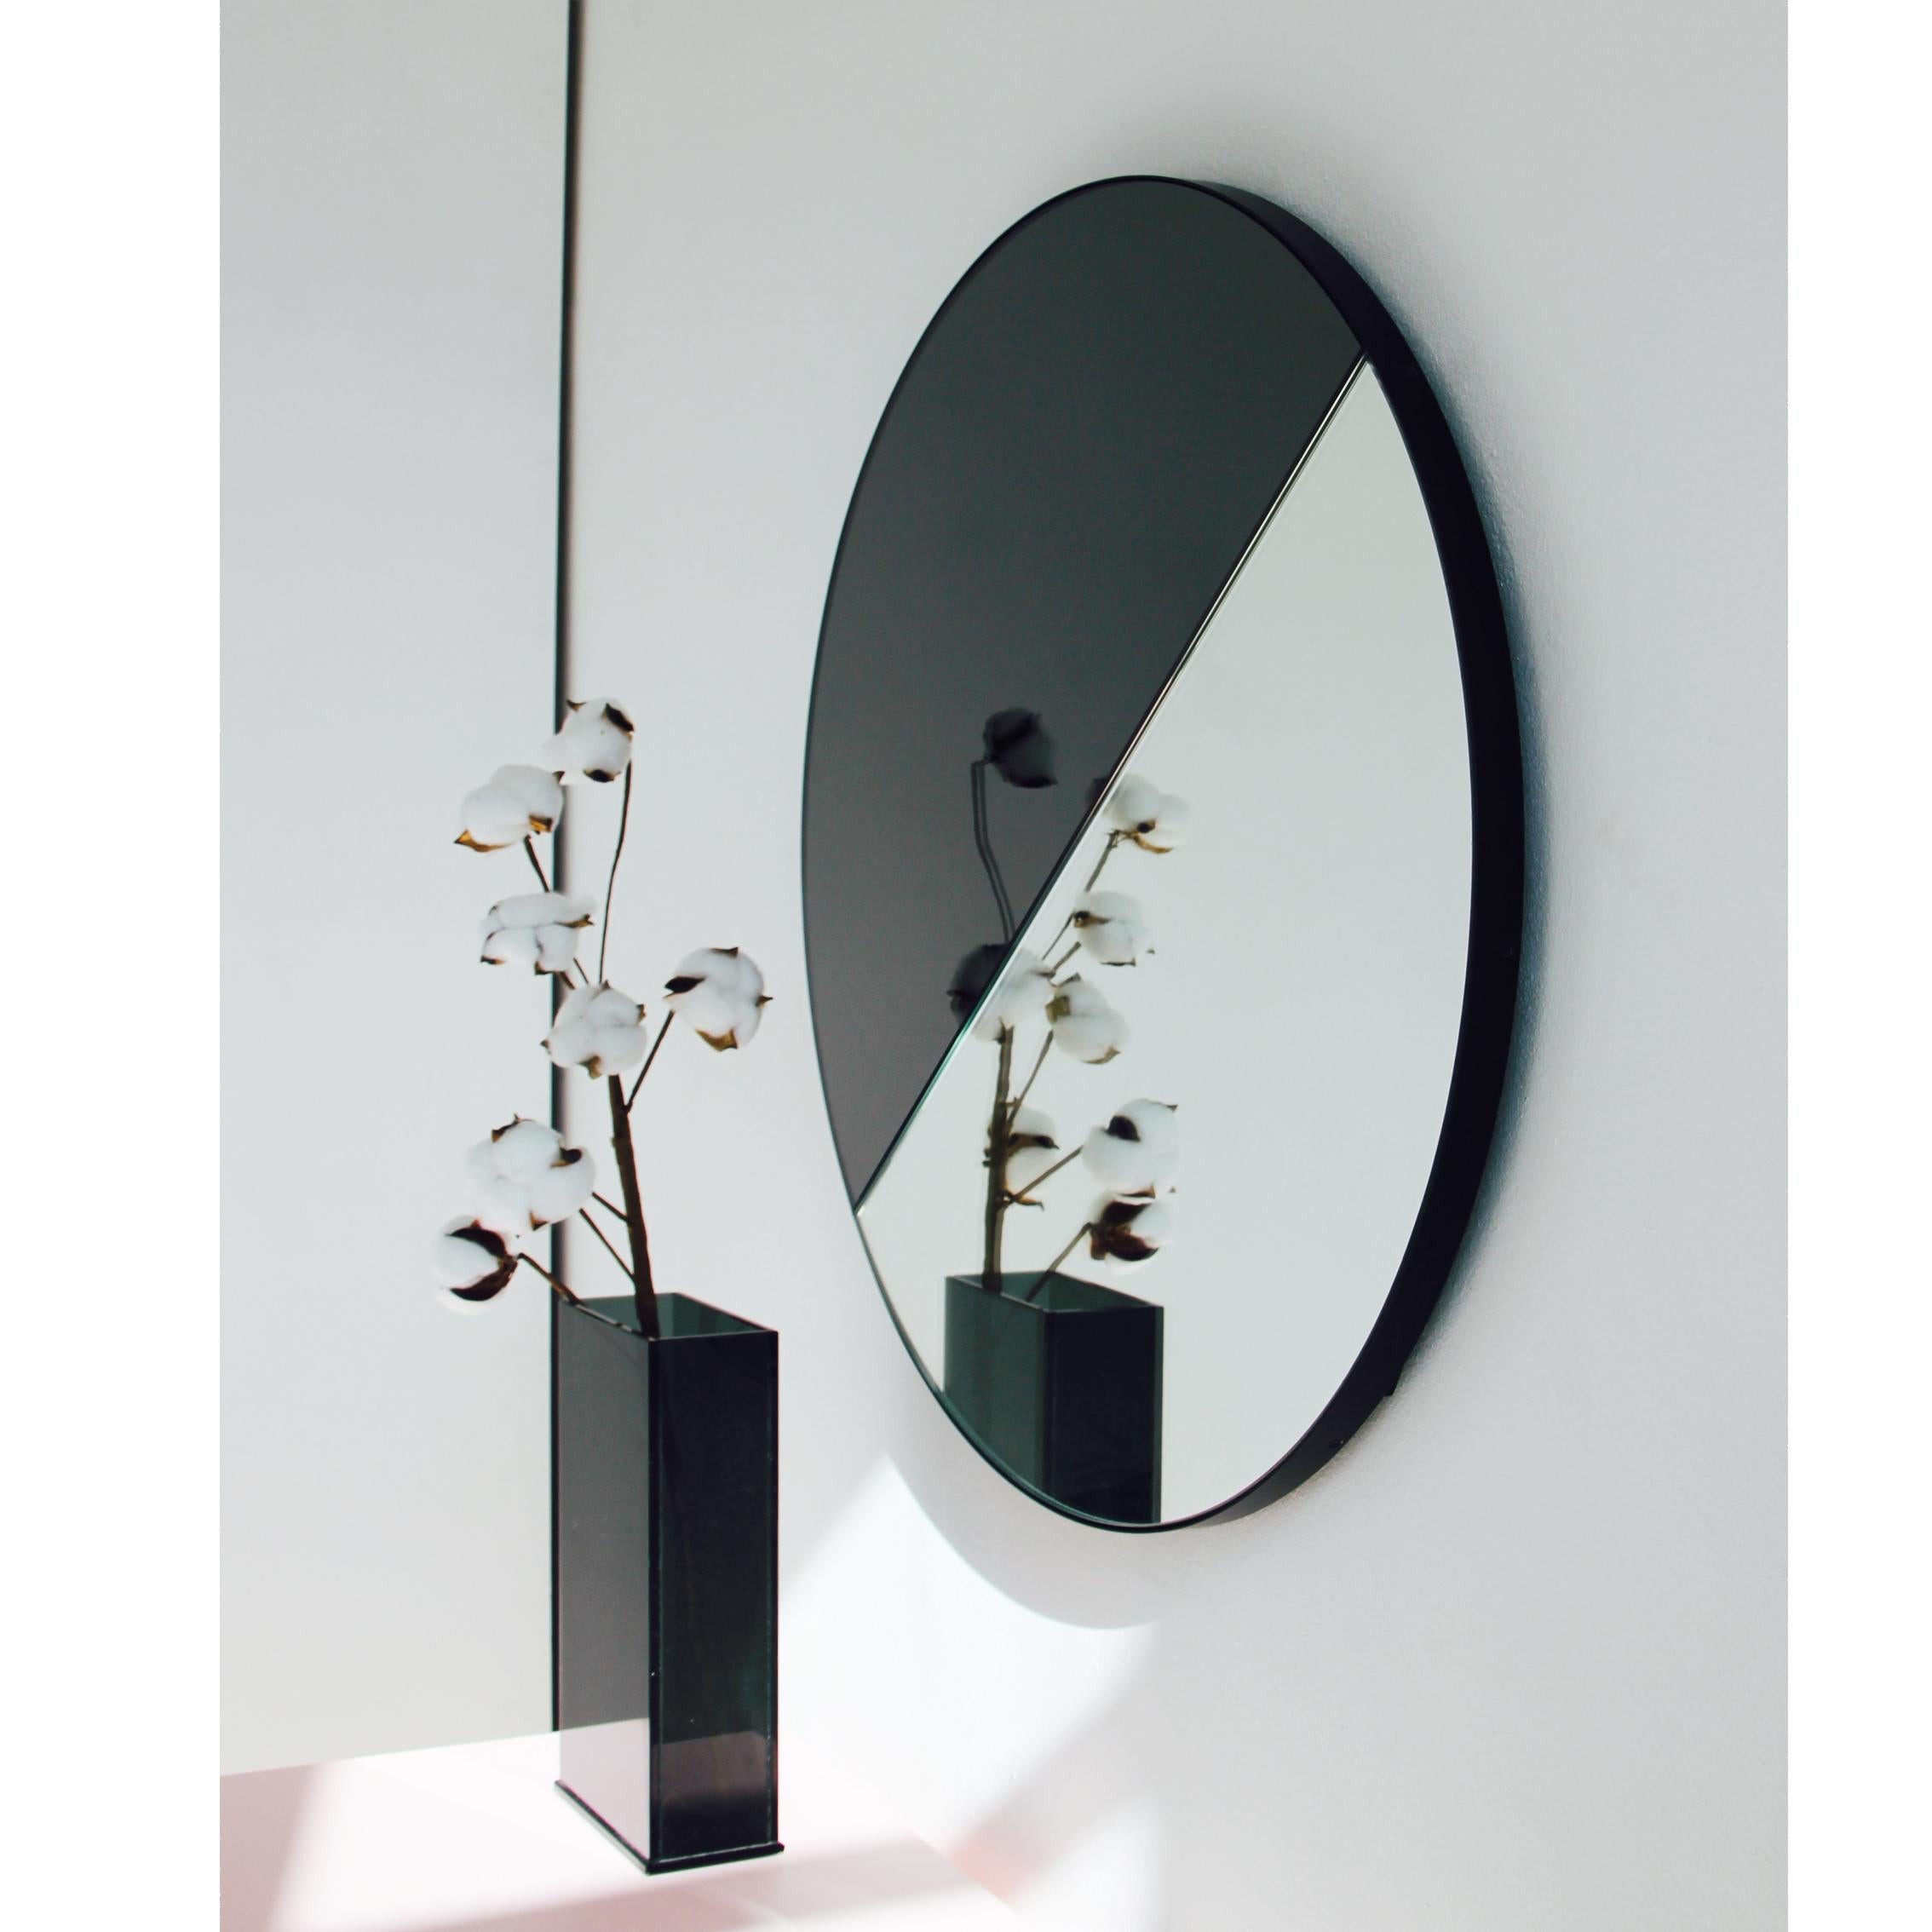 Orbis Dualis Mixed Black Tint Contemporary Round Mirror with Black Frame, Small (miroir rond contemporain avec cadre noir) Neuf - En vente à London, GB